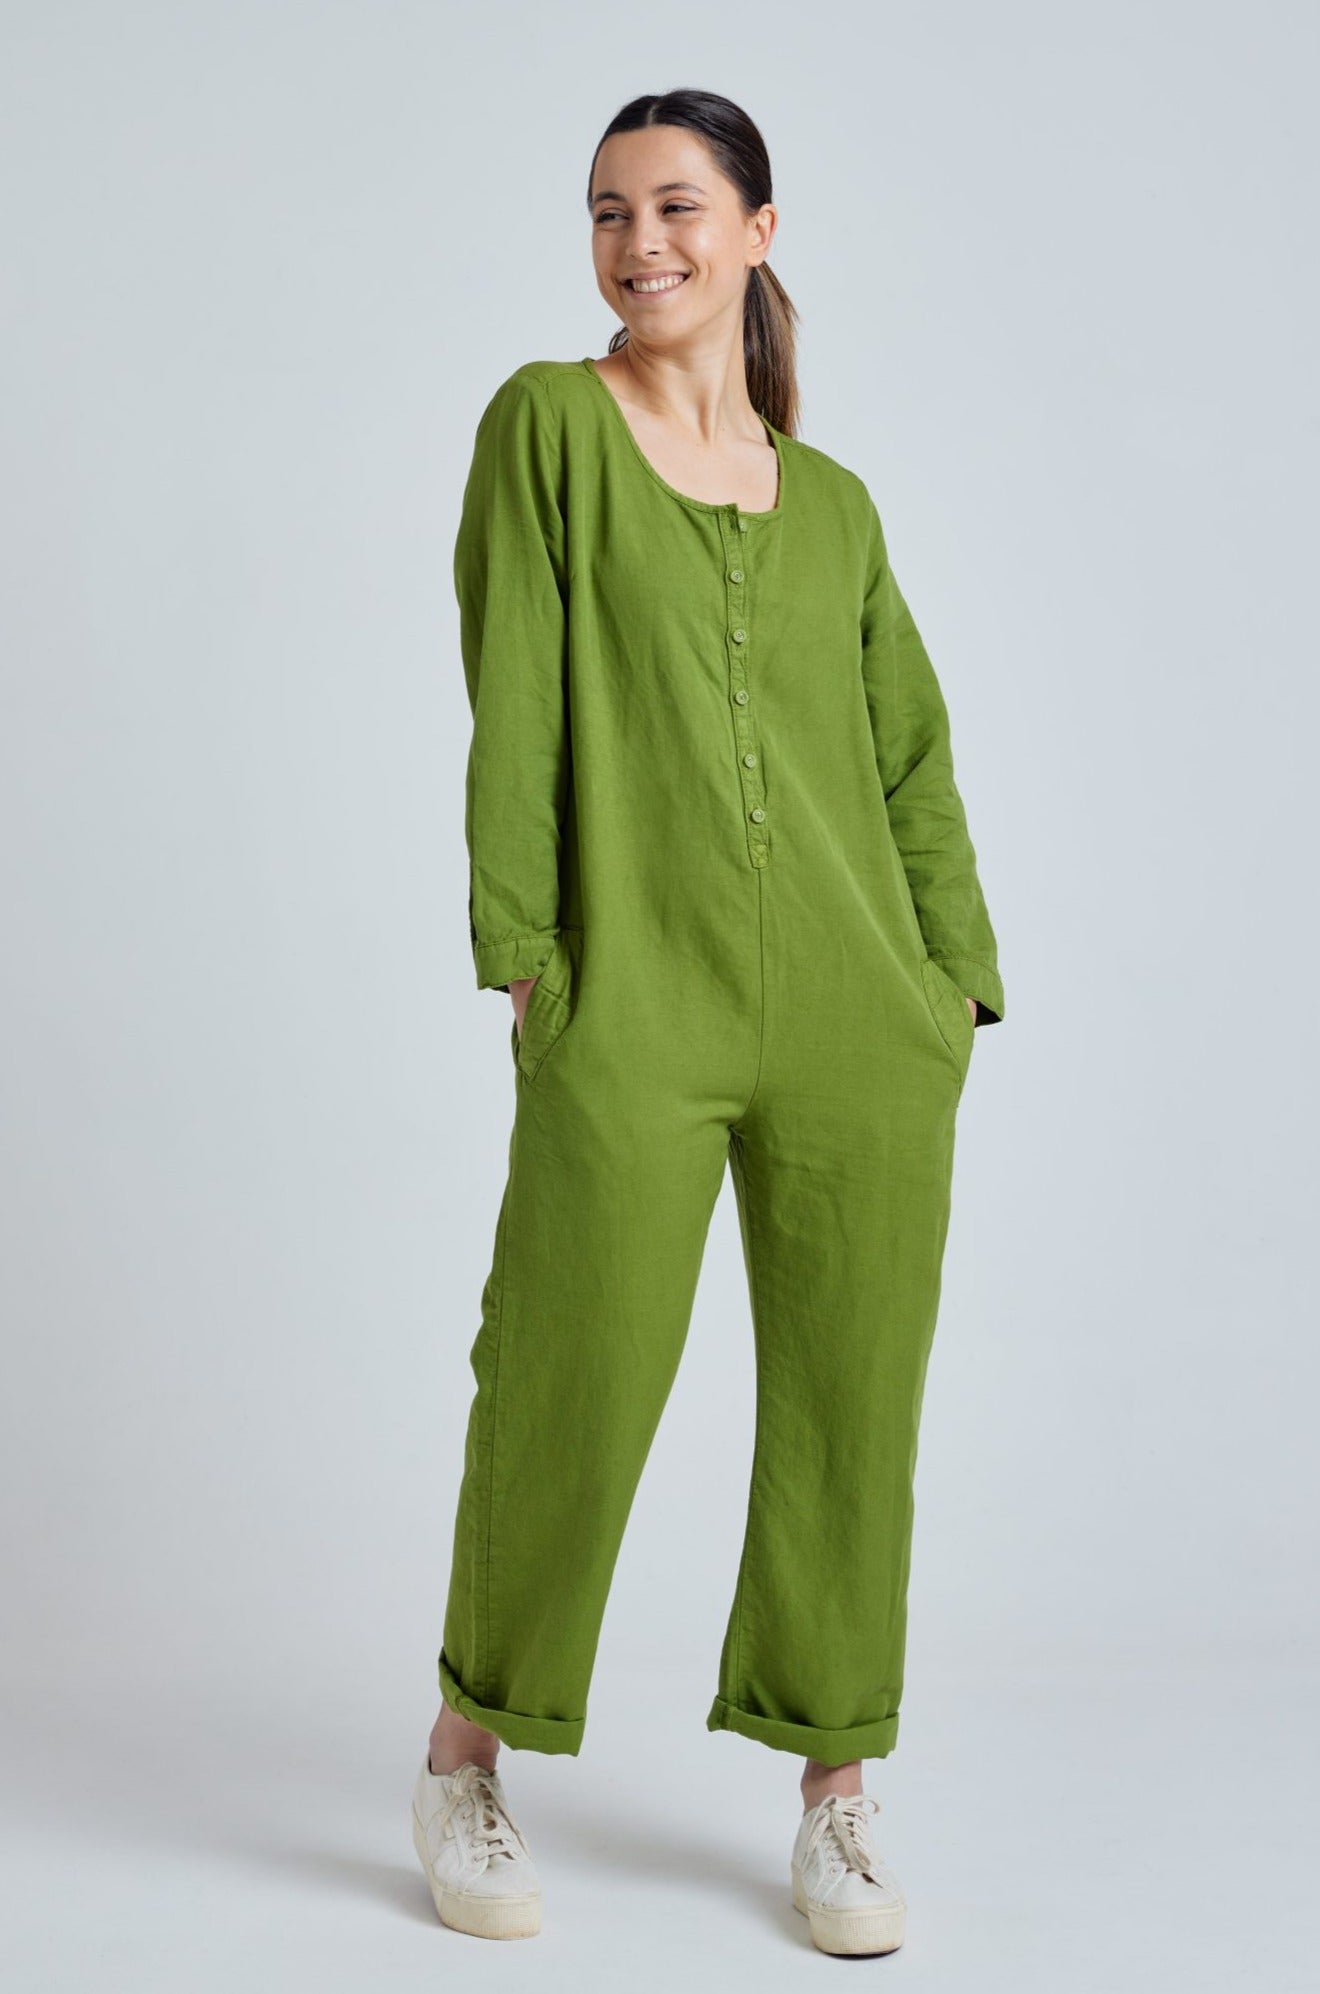 CLARA spring Green - GOTS Organic Cotton Jumpsuit by Flax & Loom, S